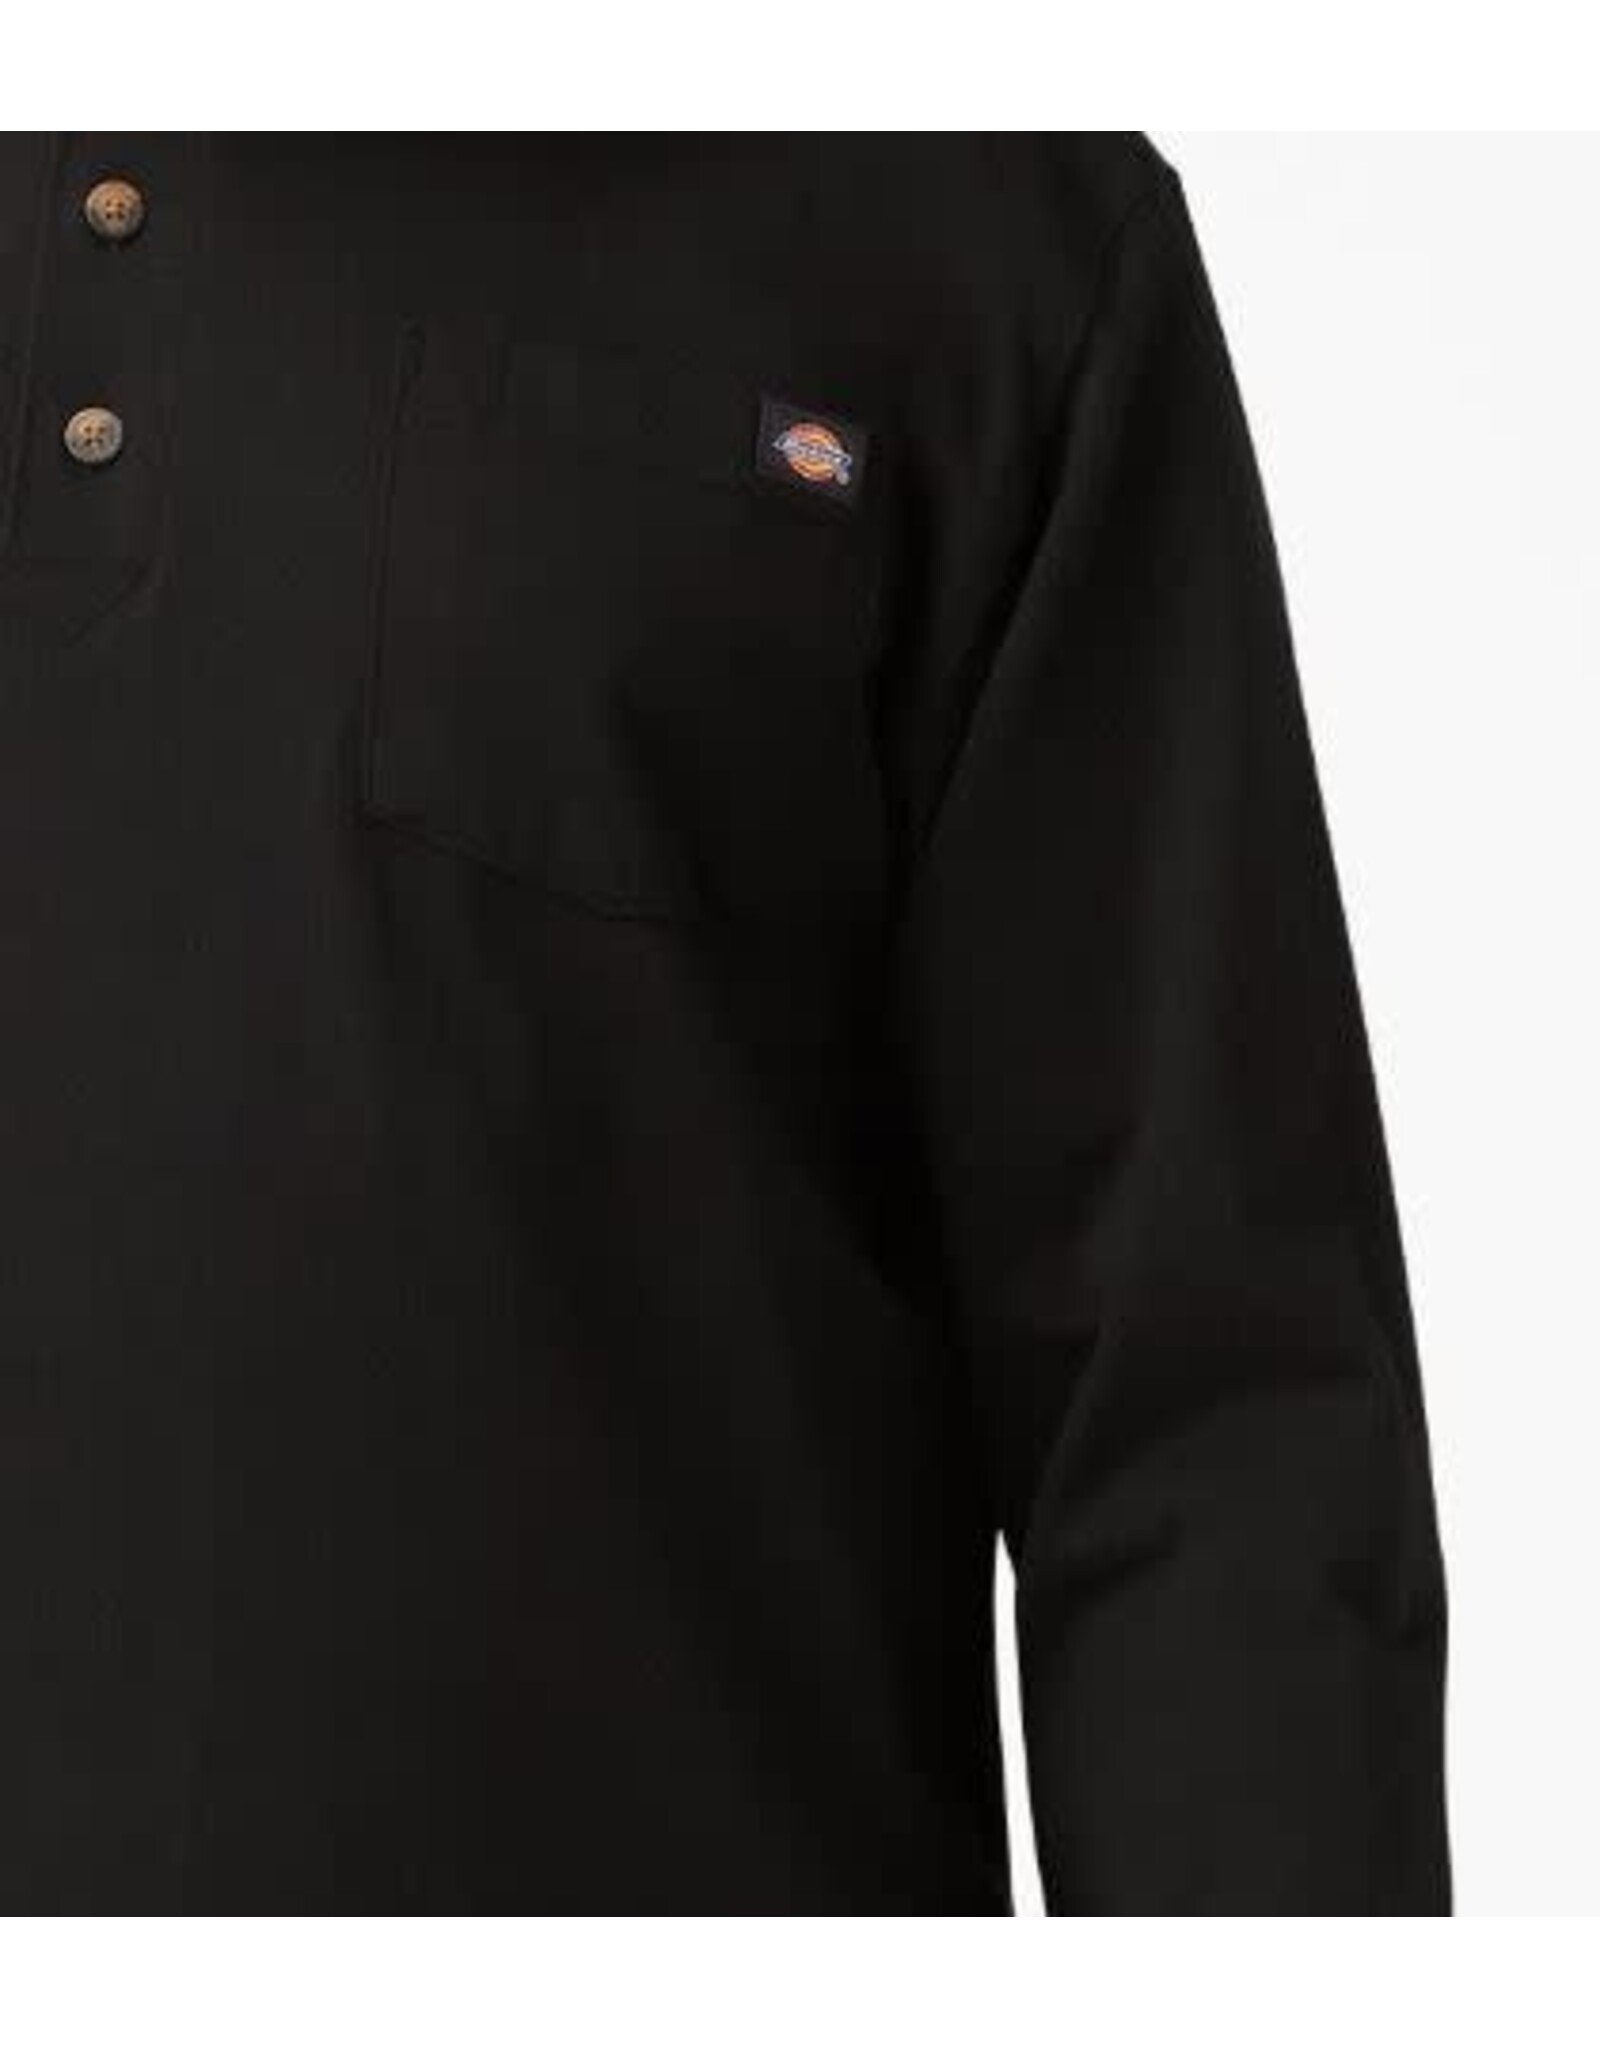 DICKIES Heavyweight Long Sleeve HenleyT-Shirt Black - WL451BK